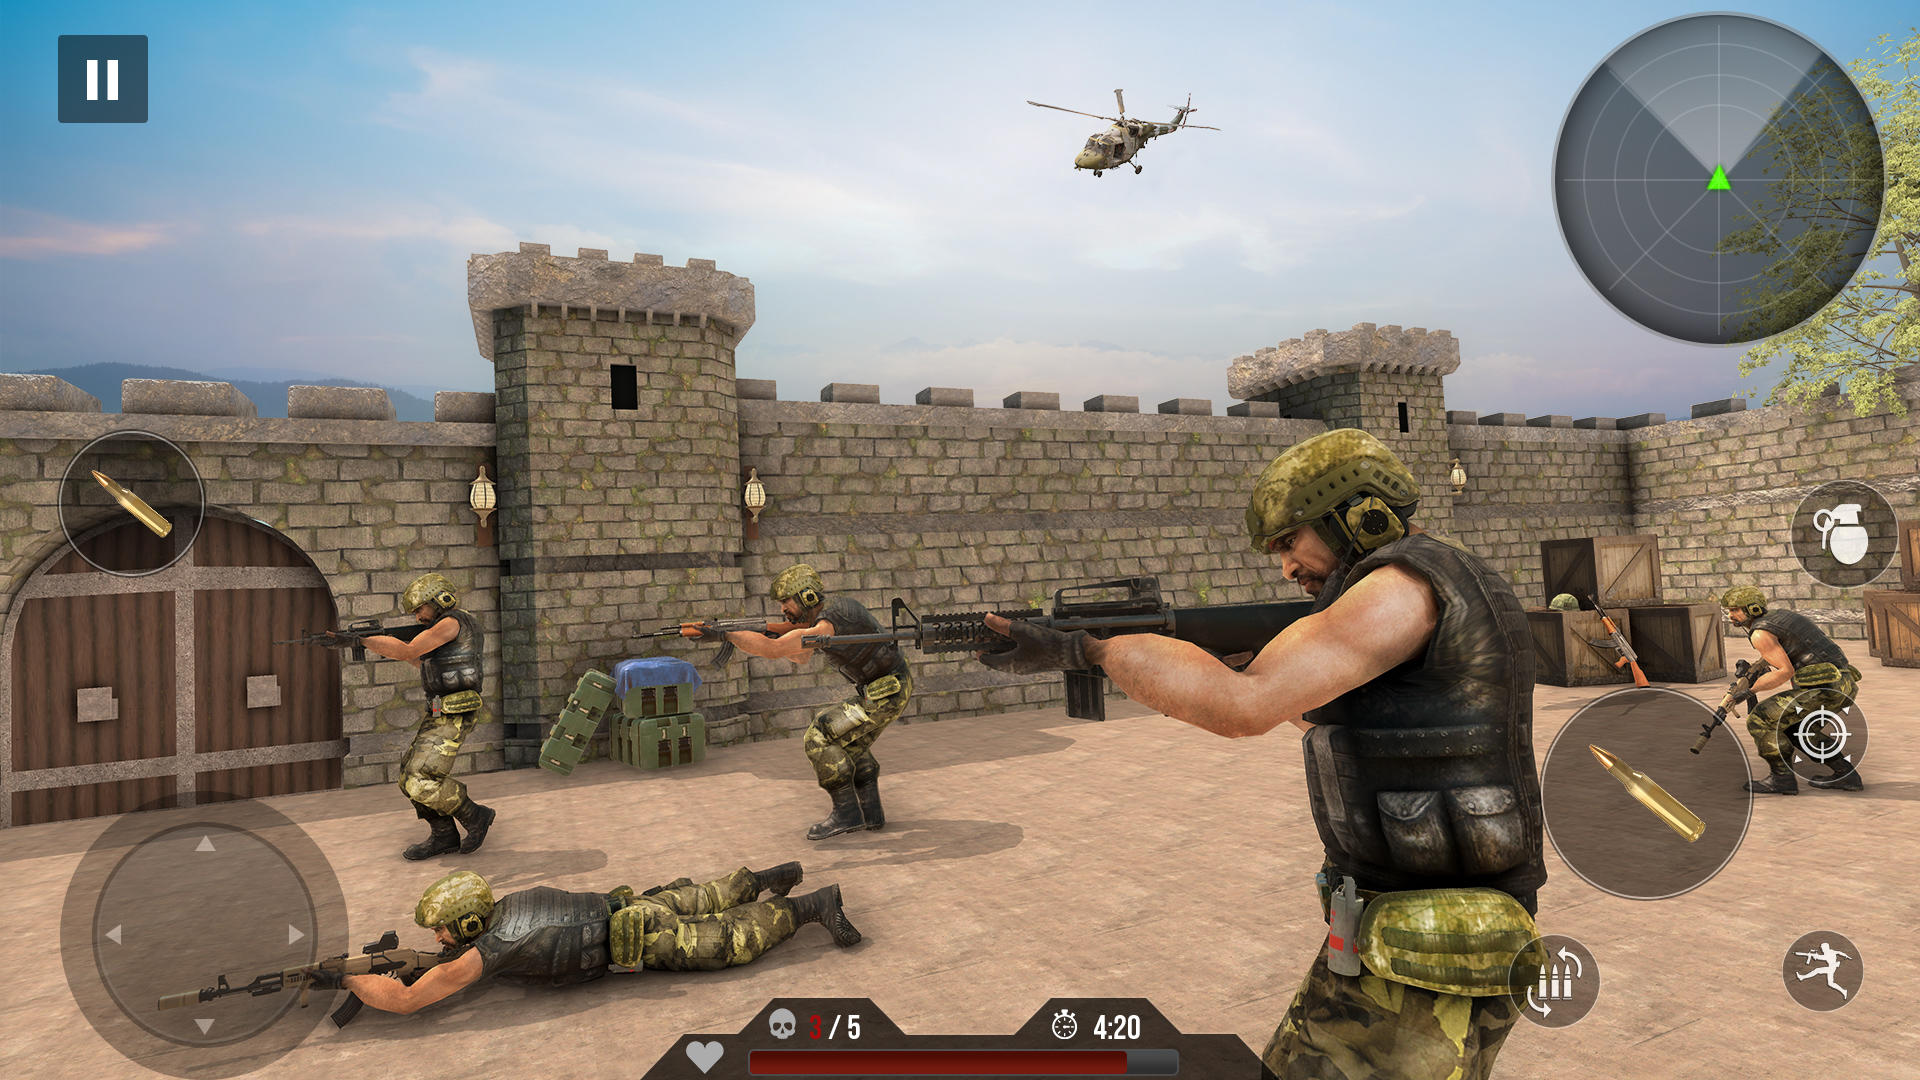 Screenshot 1 of एफपीएस एनकाउंटर शूटिंग गेम्स 2.0.29